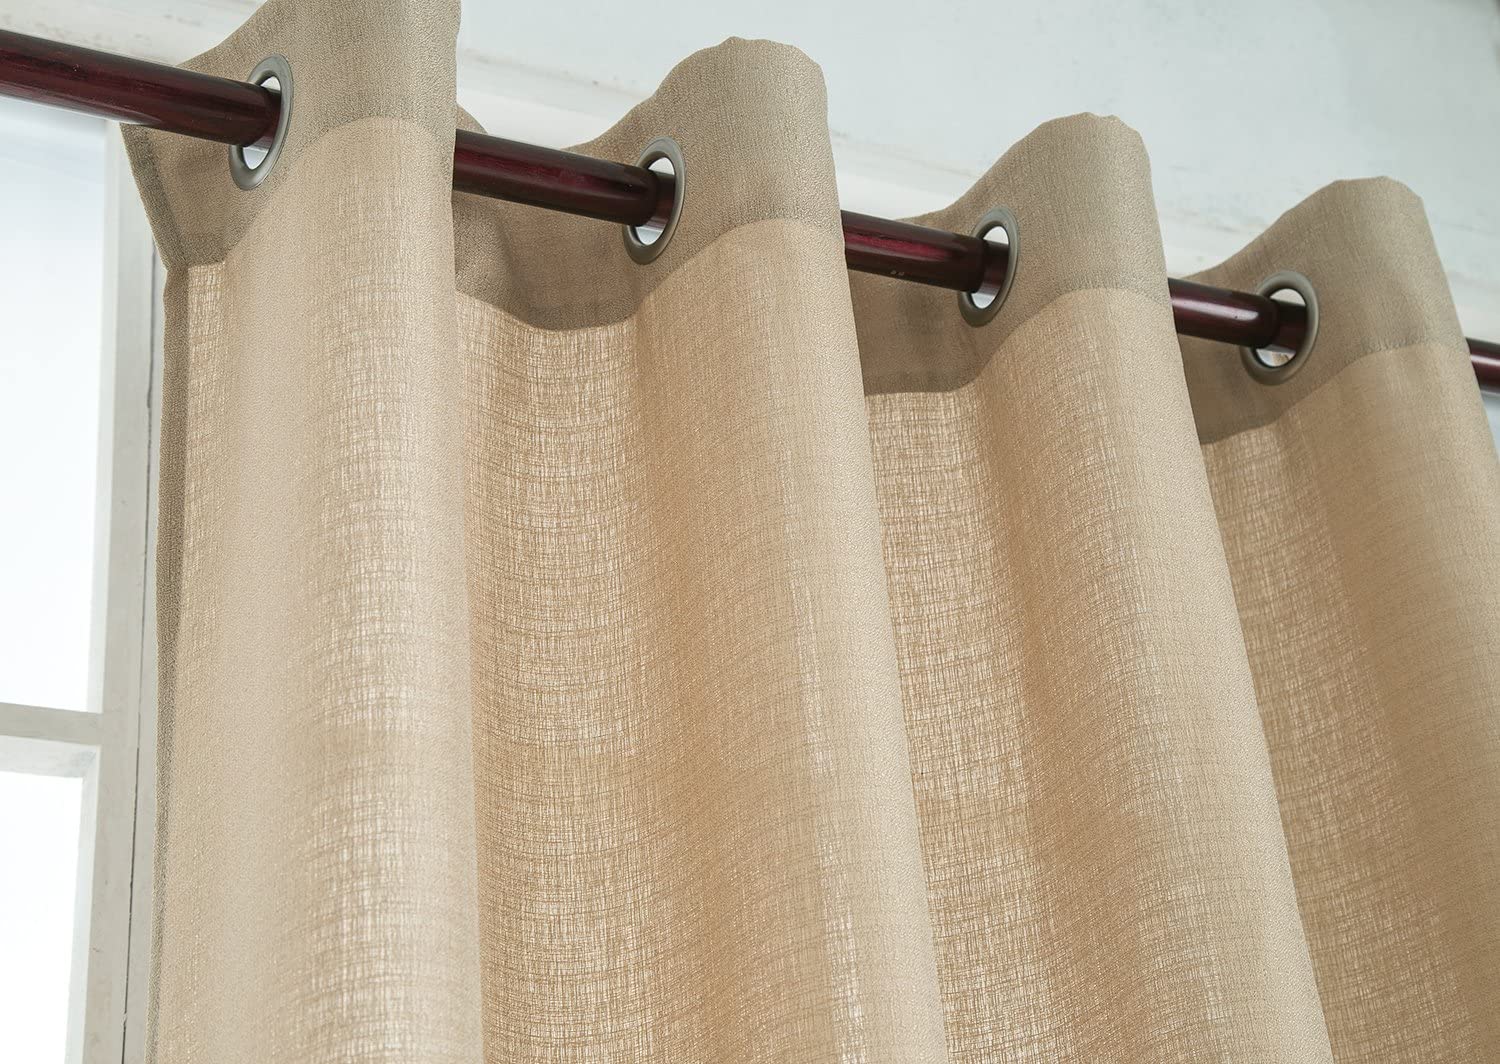 Layne Textured 54 x 90 in. Single Grommet Curtain Panel - Linen Universe Co.